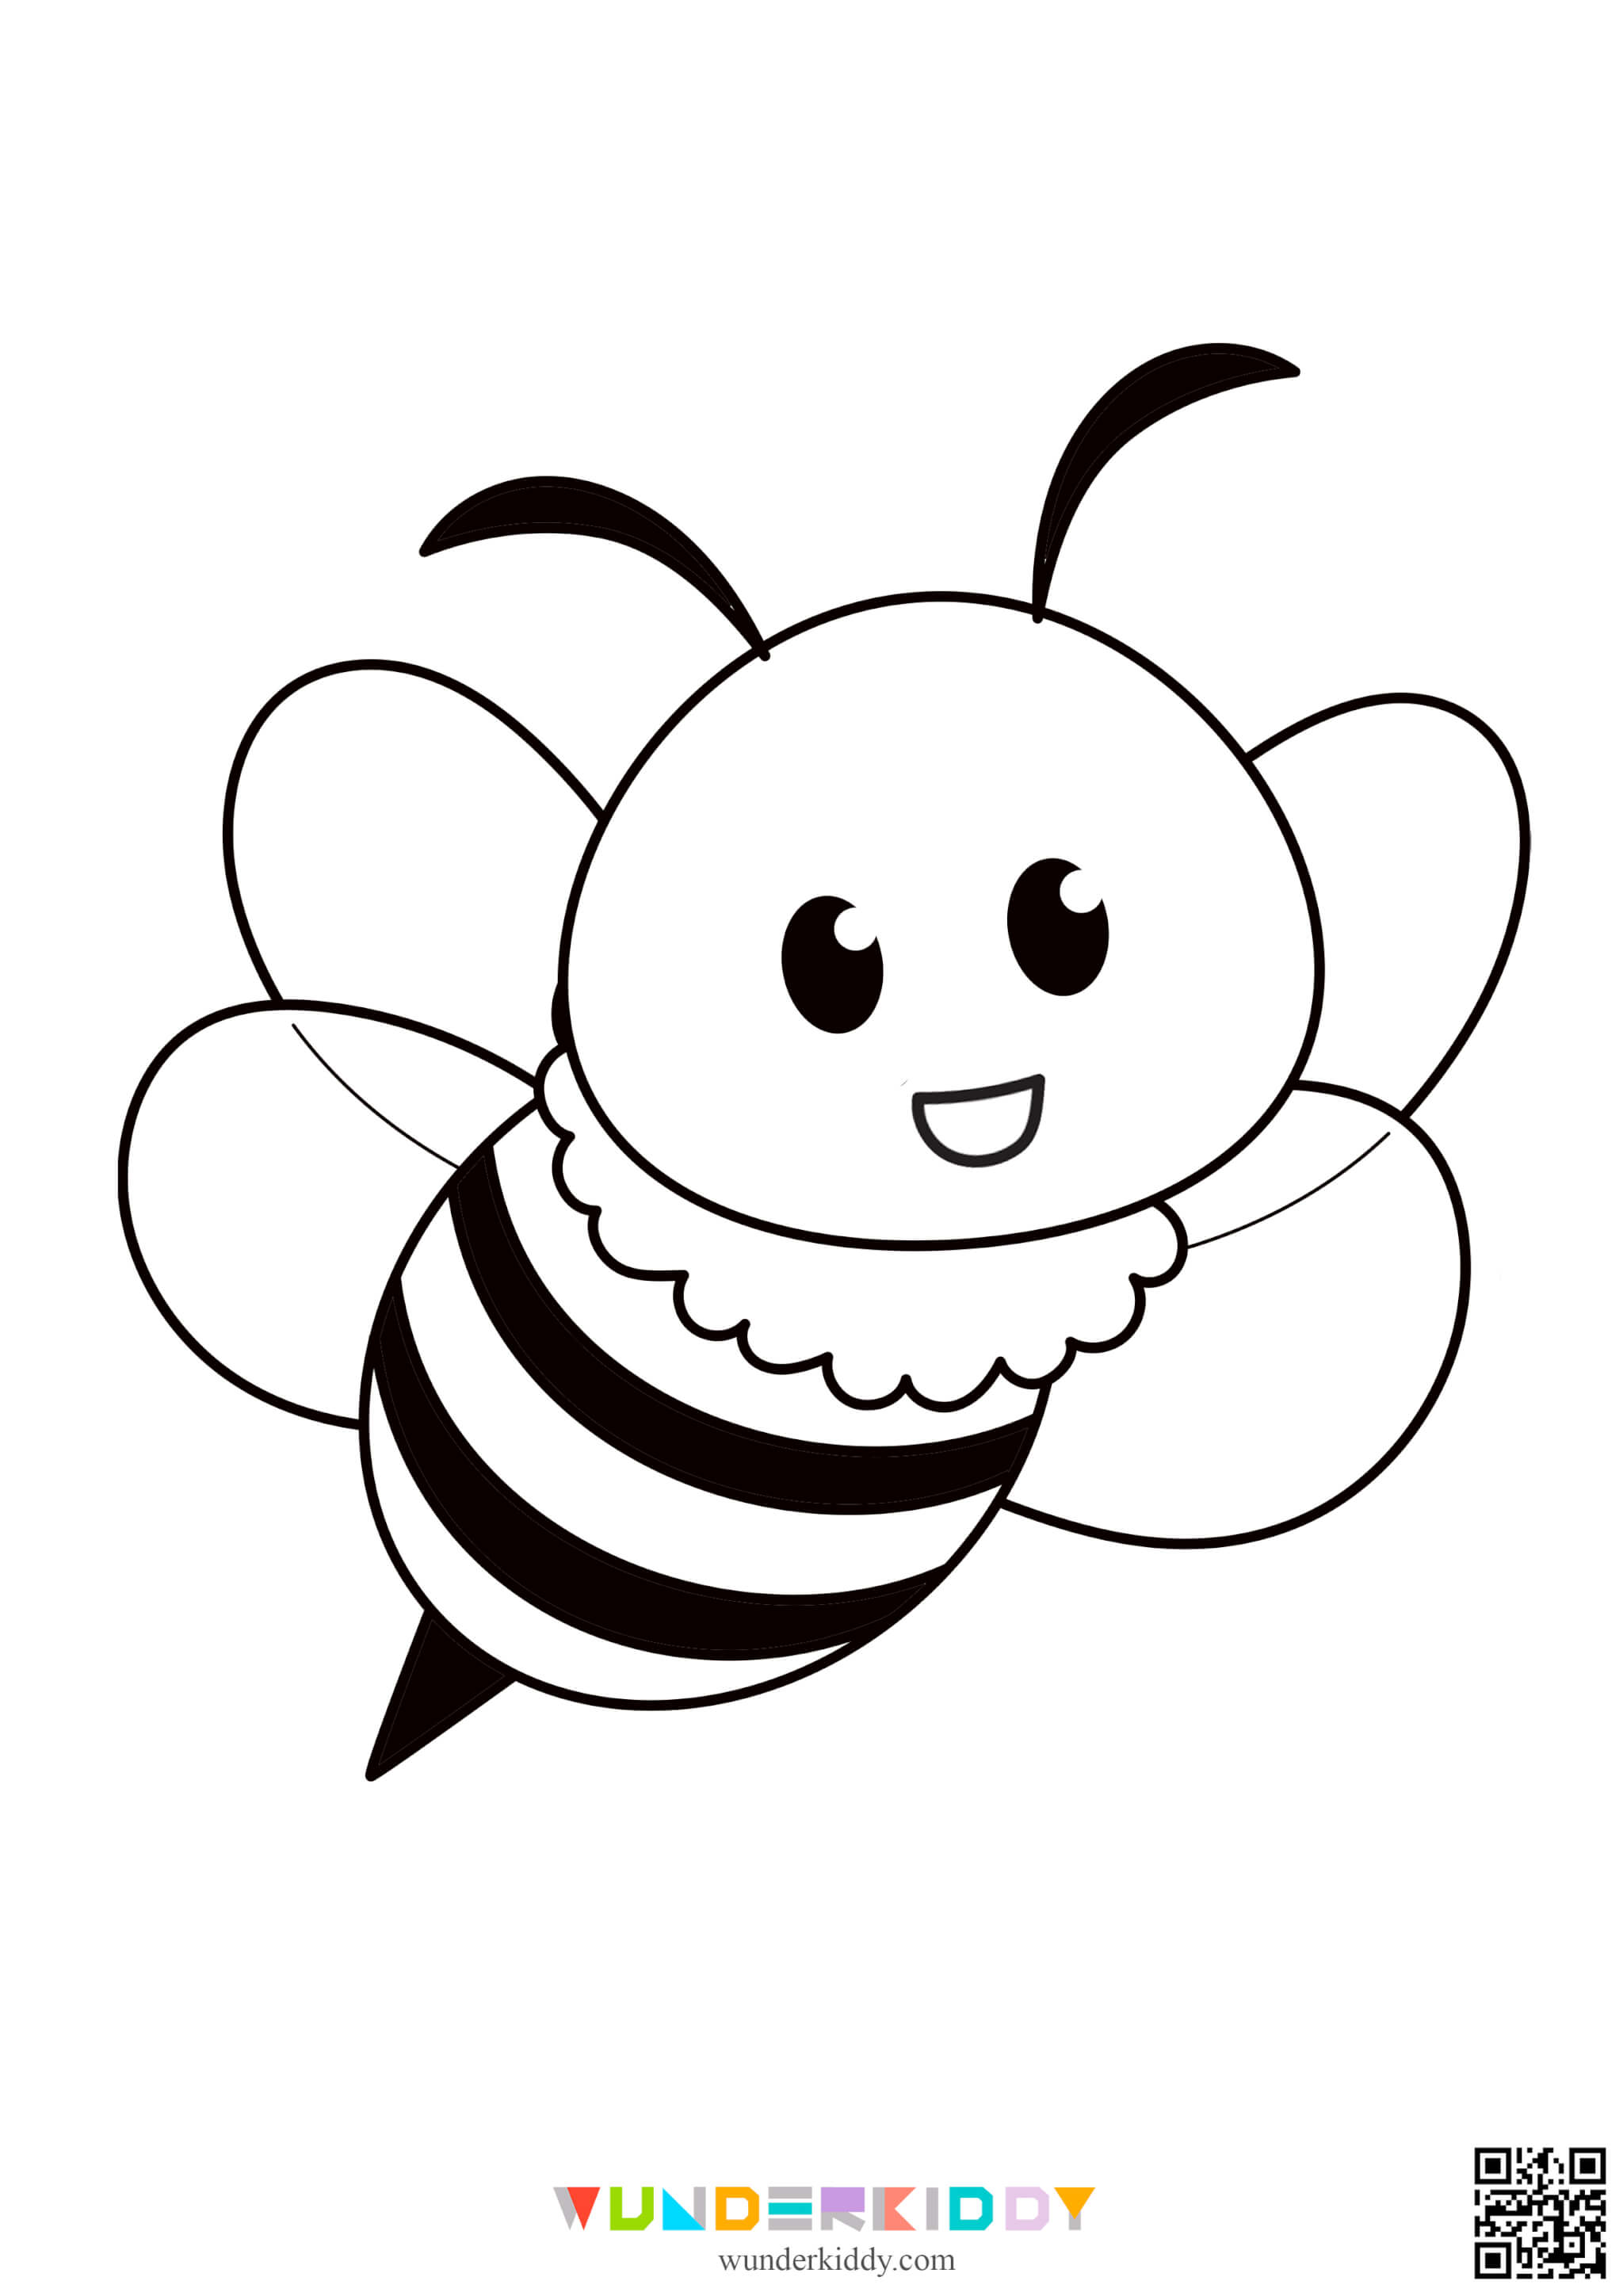 Bee Template Free Printable - Image 2